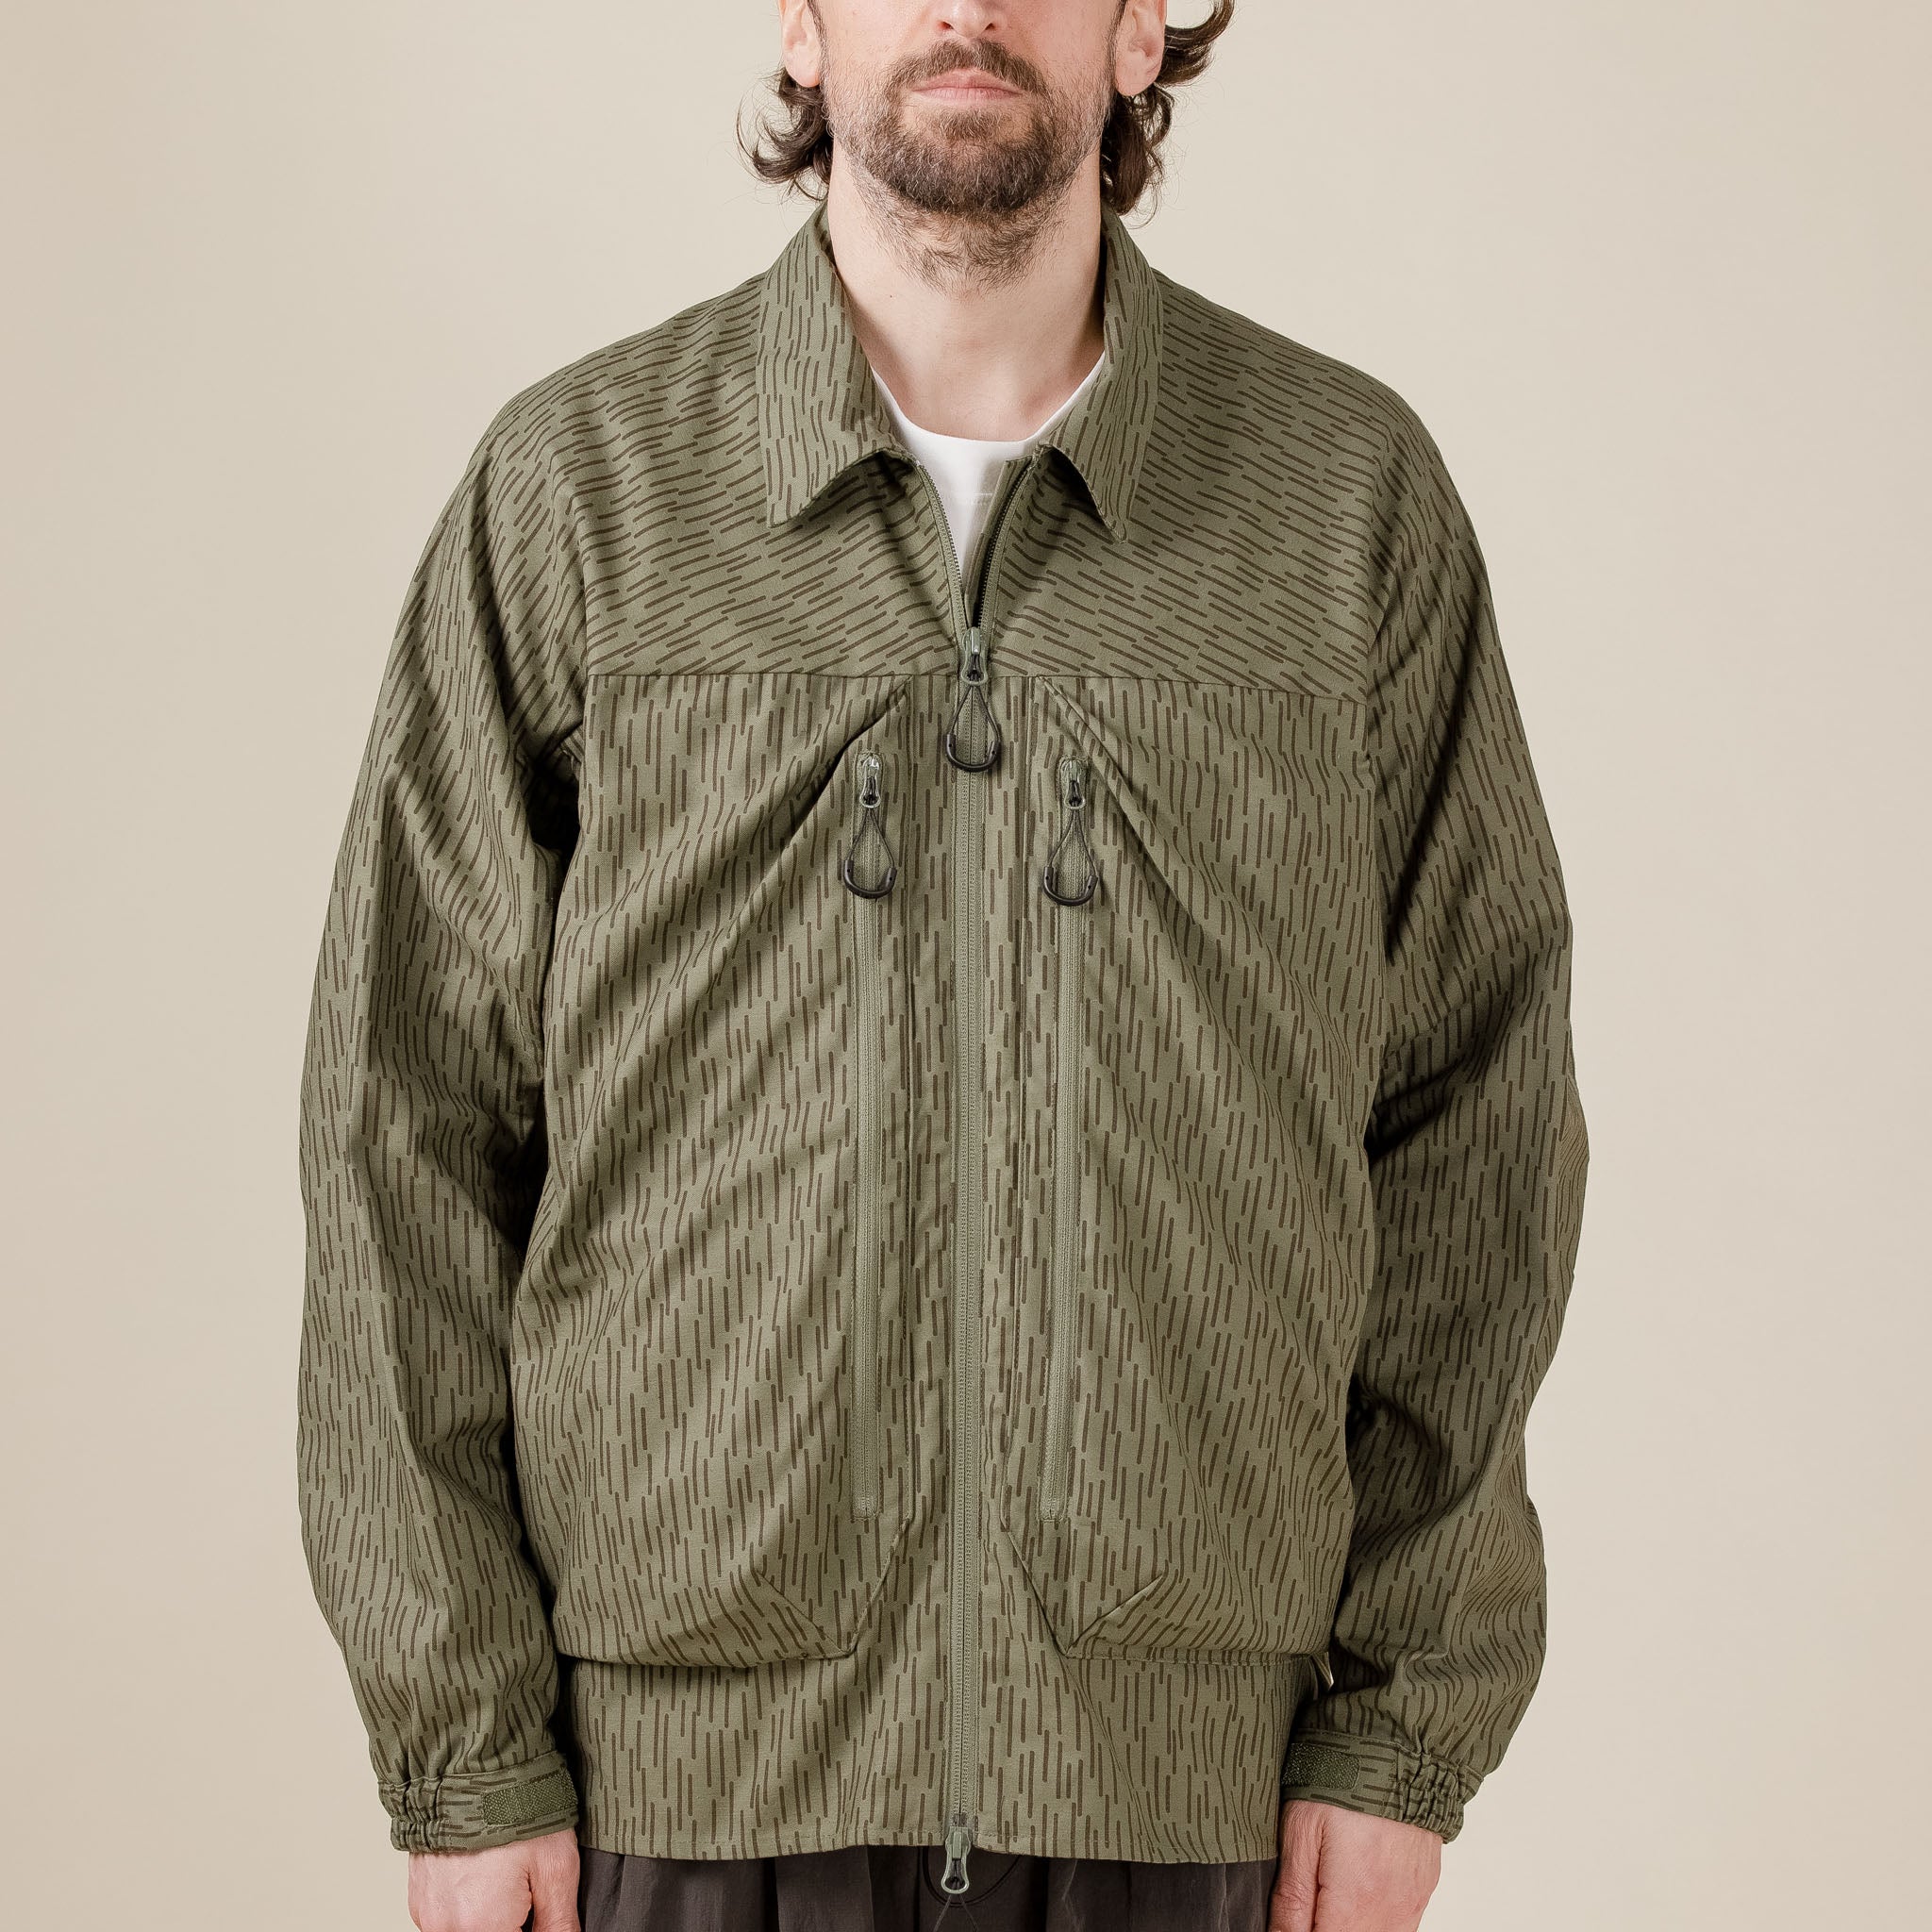 CMF Comfy Outdoor Garment - Covered Shirt Jacket Rain Camo - Khaki Green "lost hills Japan" "cmf outdoor garment stockists" "comfy outdoor garment stockists"